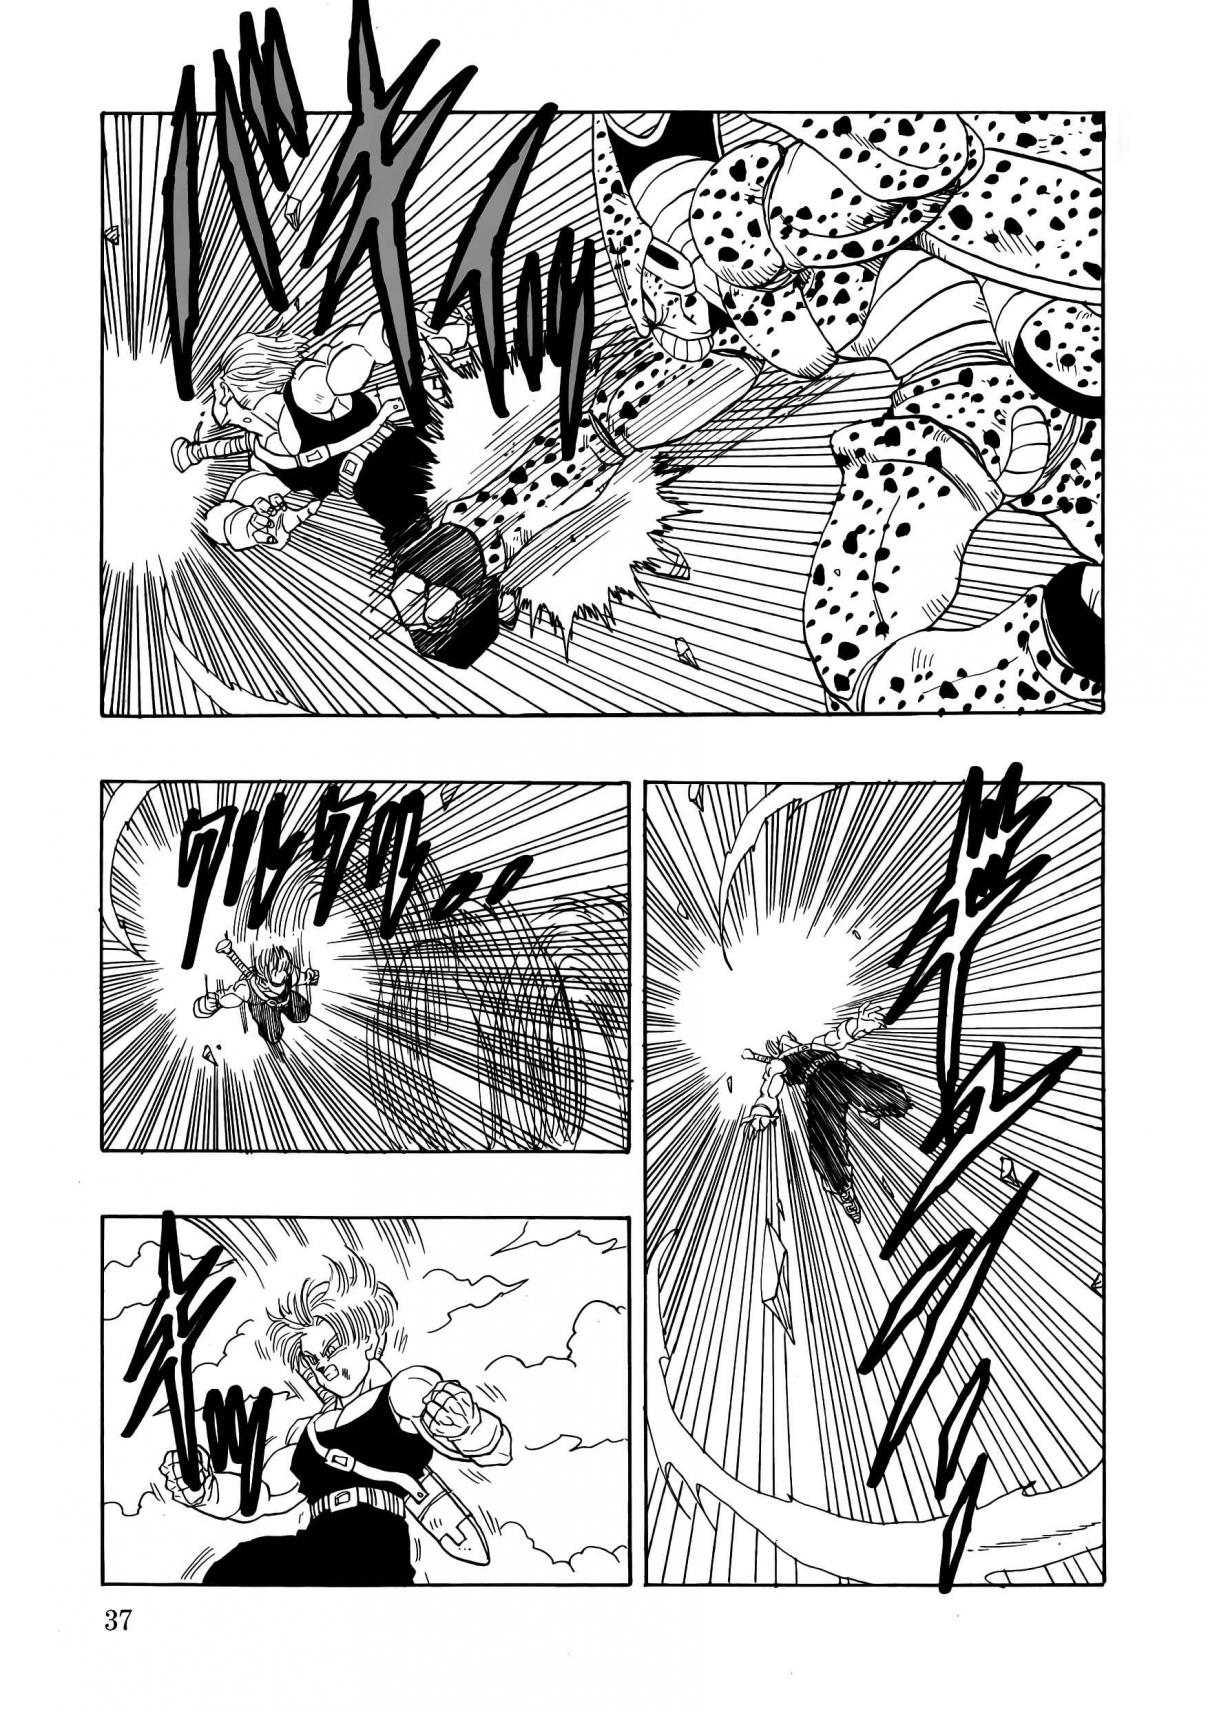 Dragon Ball Gohan x Trunks After (Doujinshi) Ch. 2 Trunks The Targeted Warrior